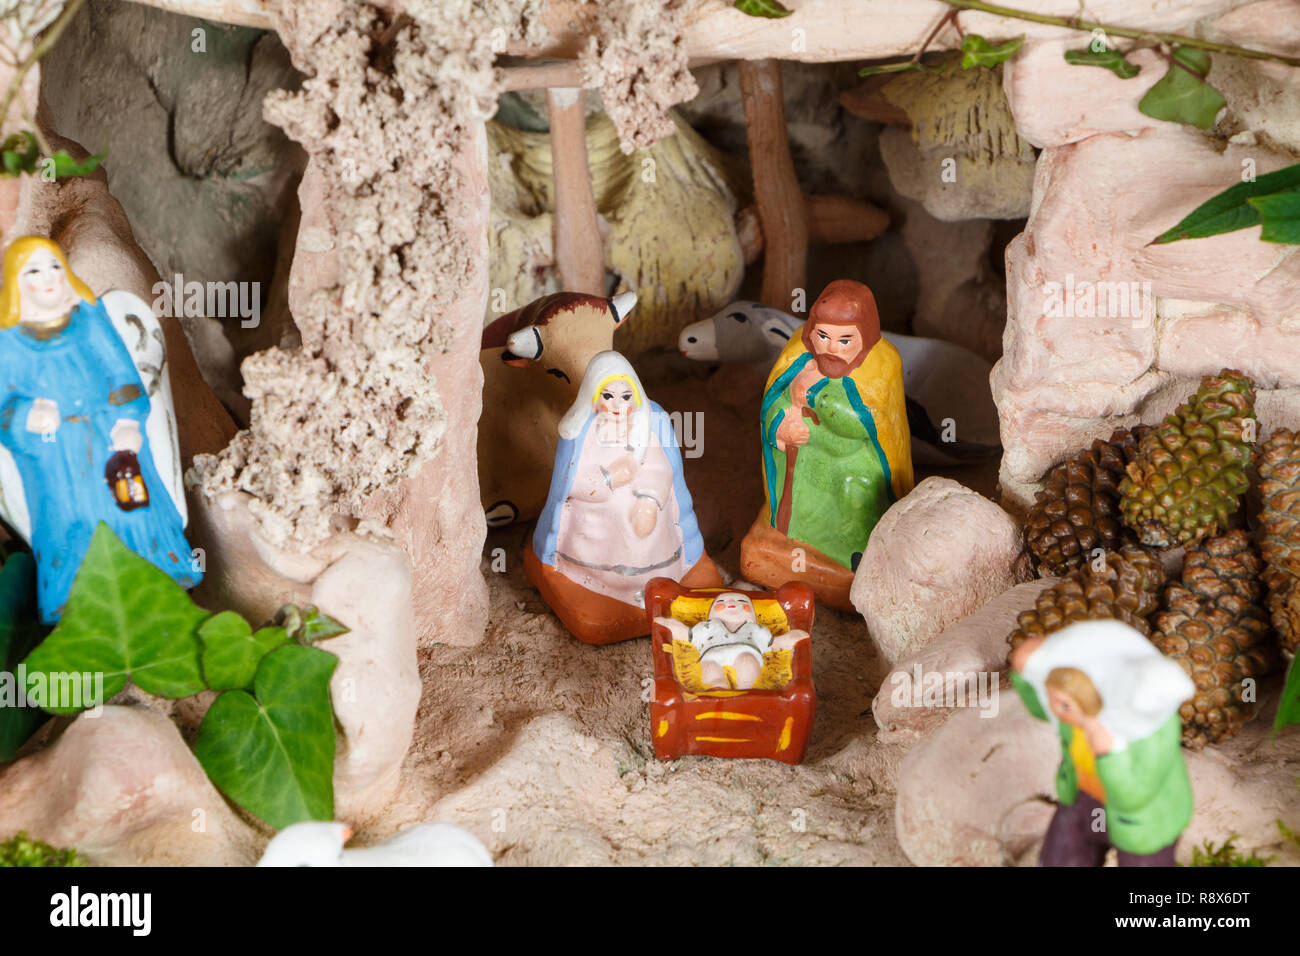 Nativity scene with provencal Christmas crib figures in terracotta Stock Photo